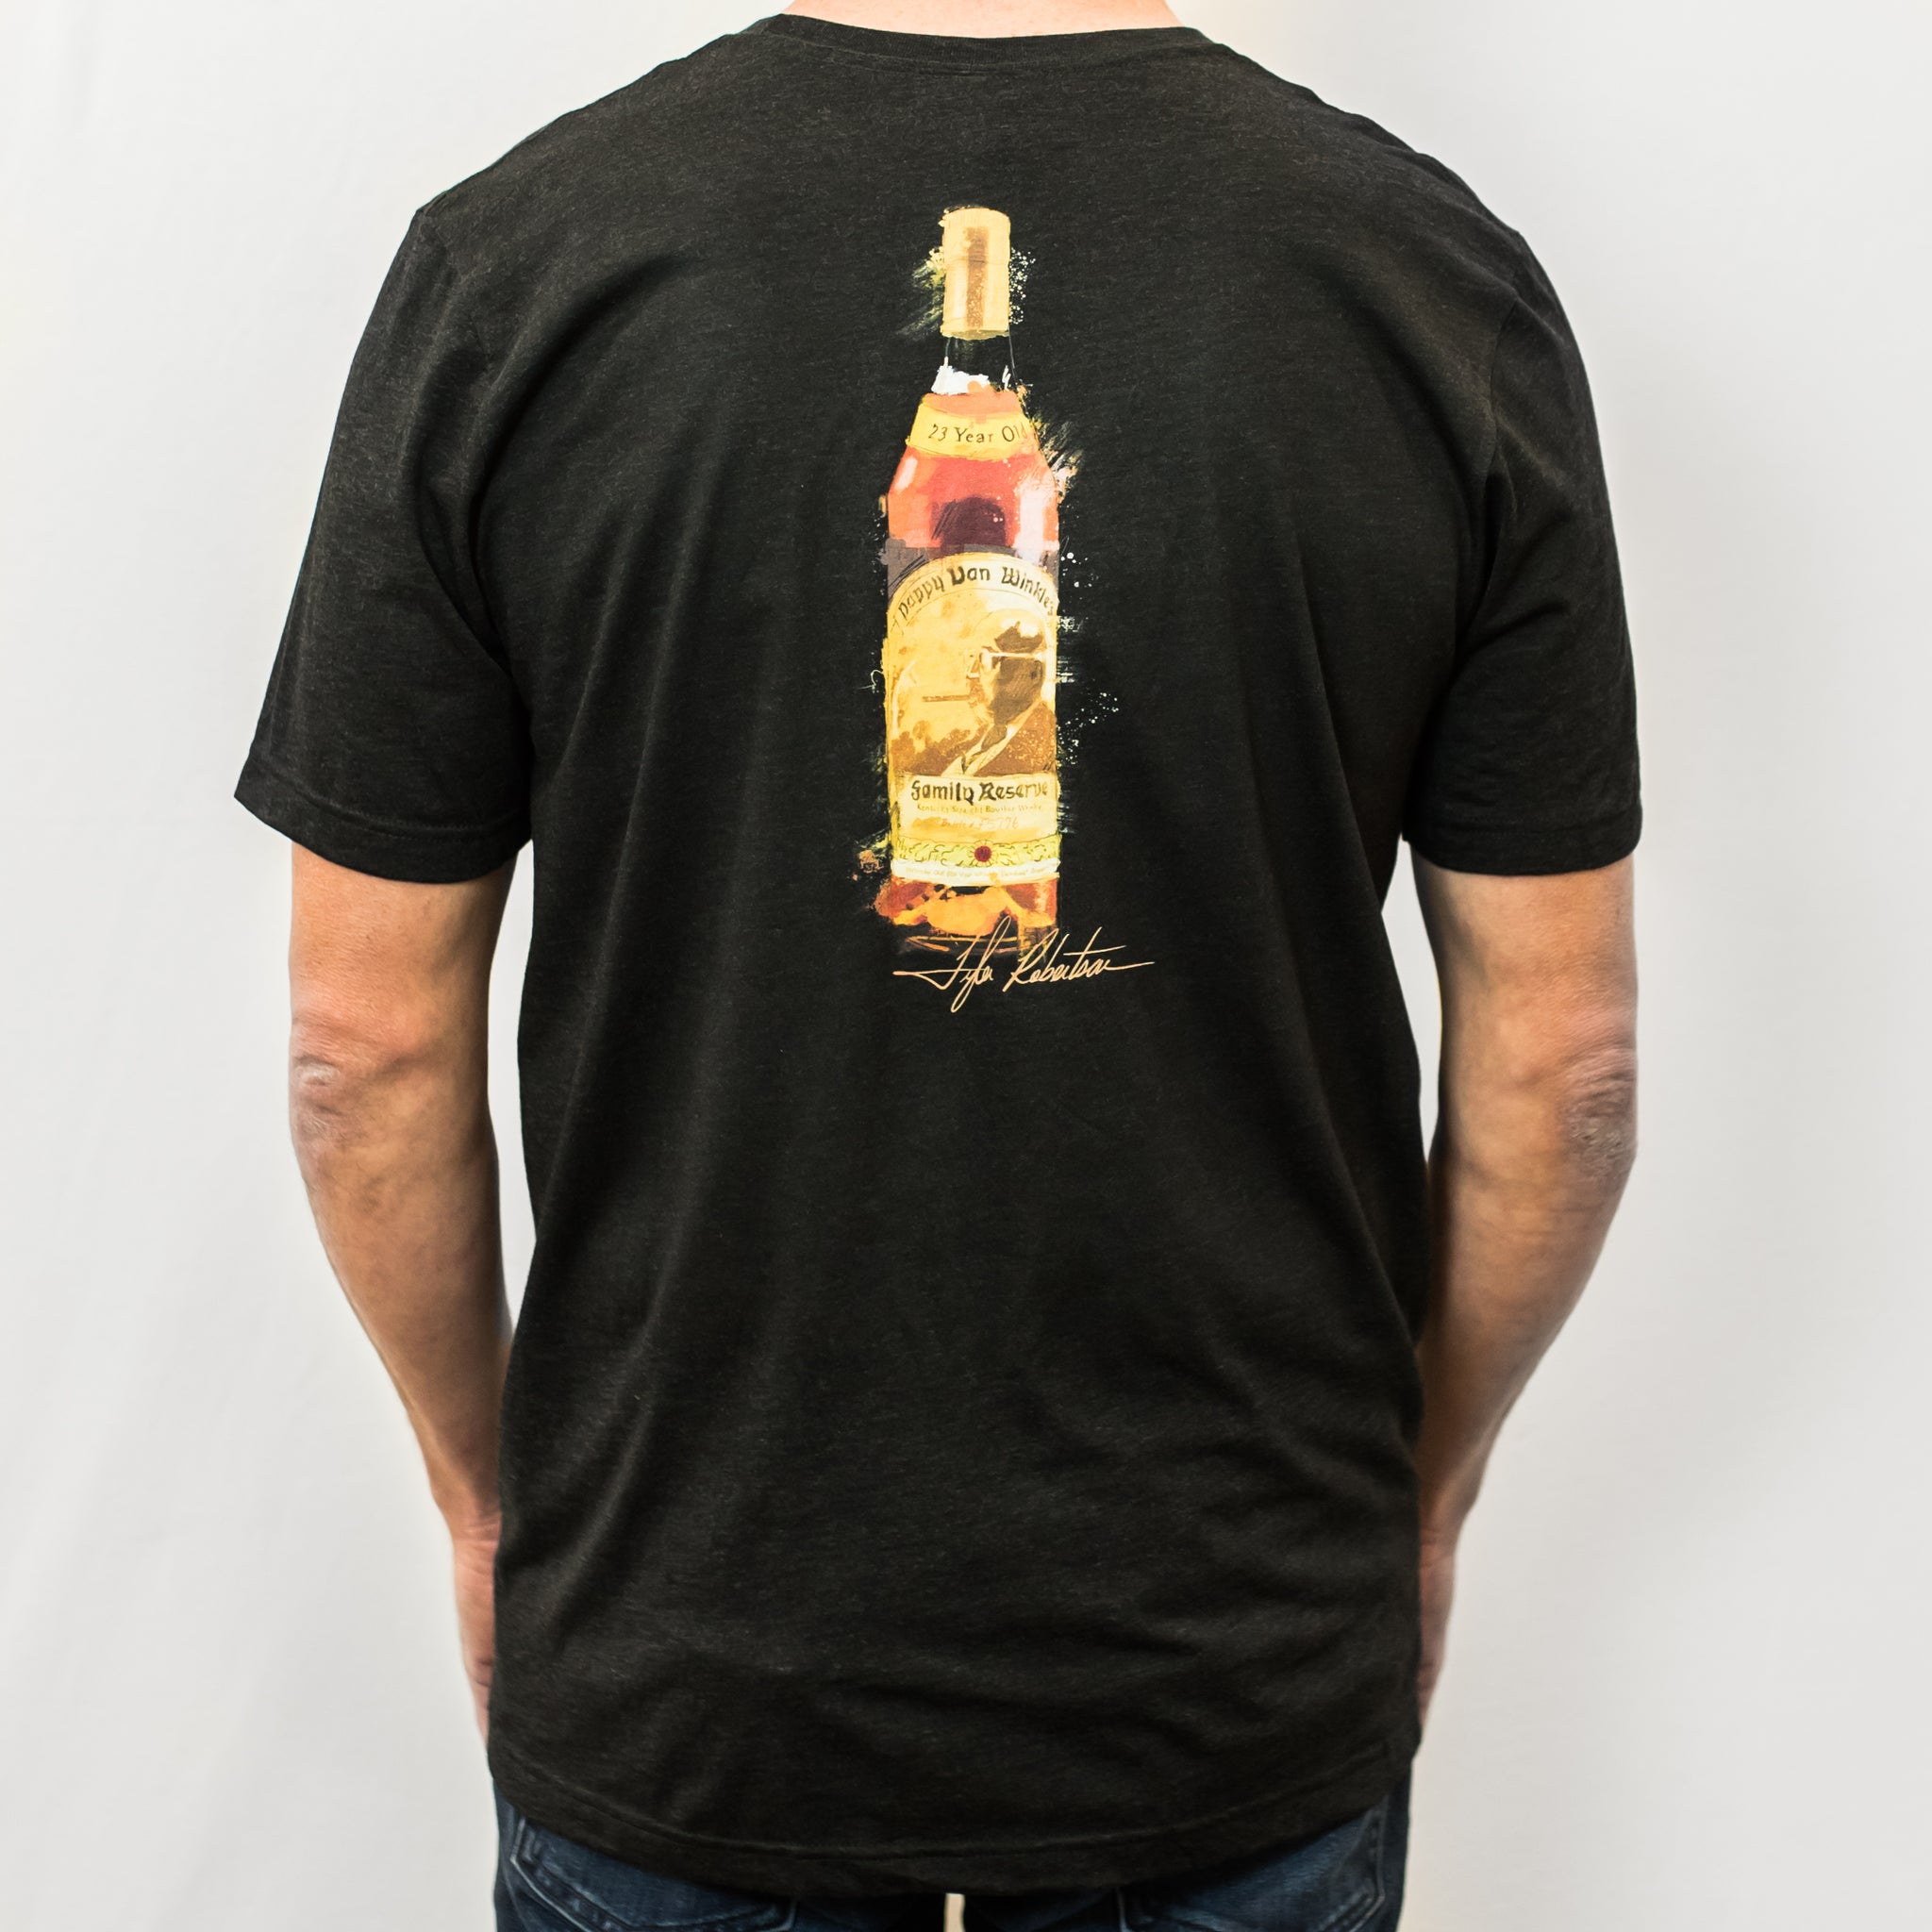 Old Louisville Whiskey Co Black Long Sleeve Shirt